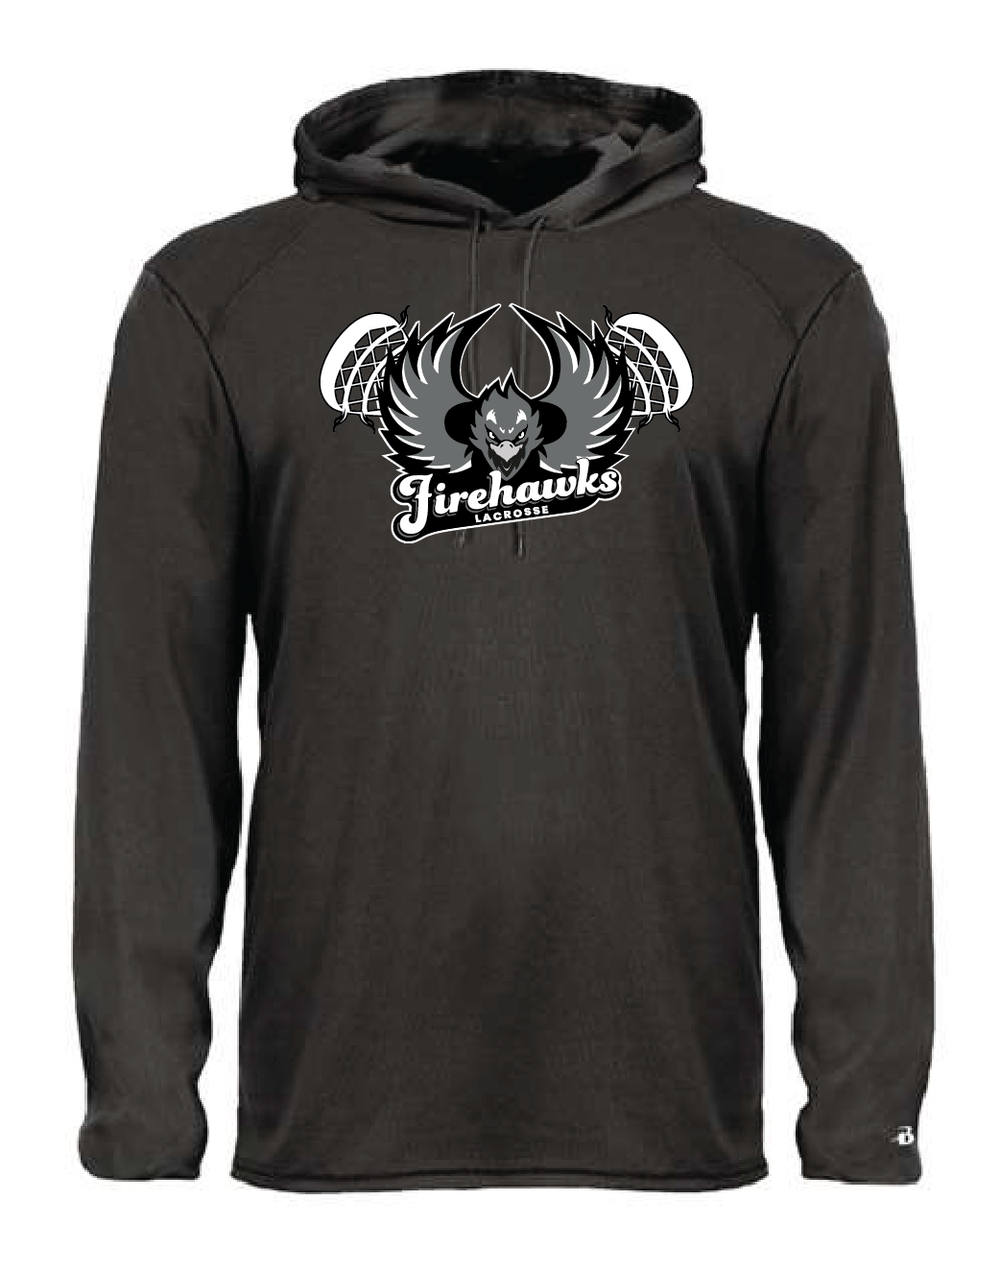 Firehawks Lacrosse - Adult & Youth Hooded Long Sleeve T-Shirt